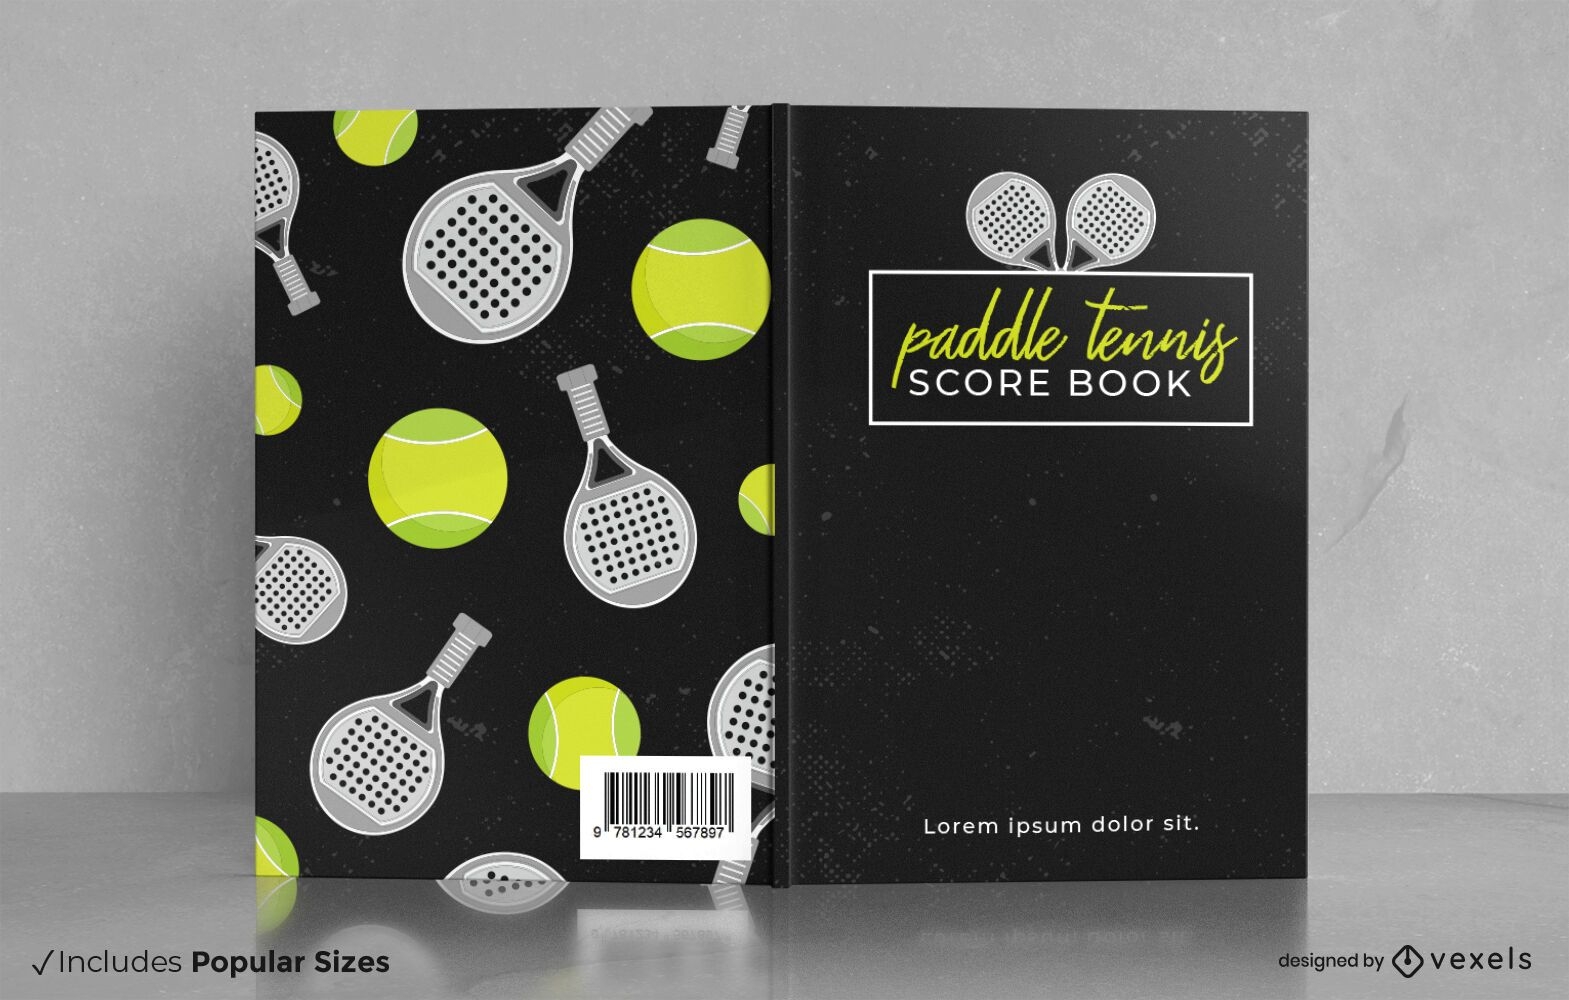 Paddle tennis score book cover design